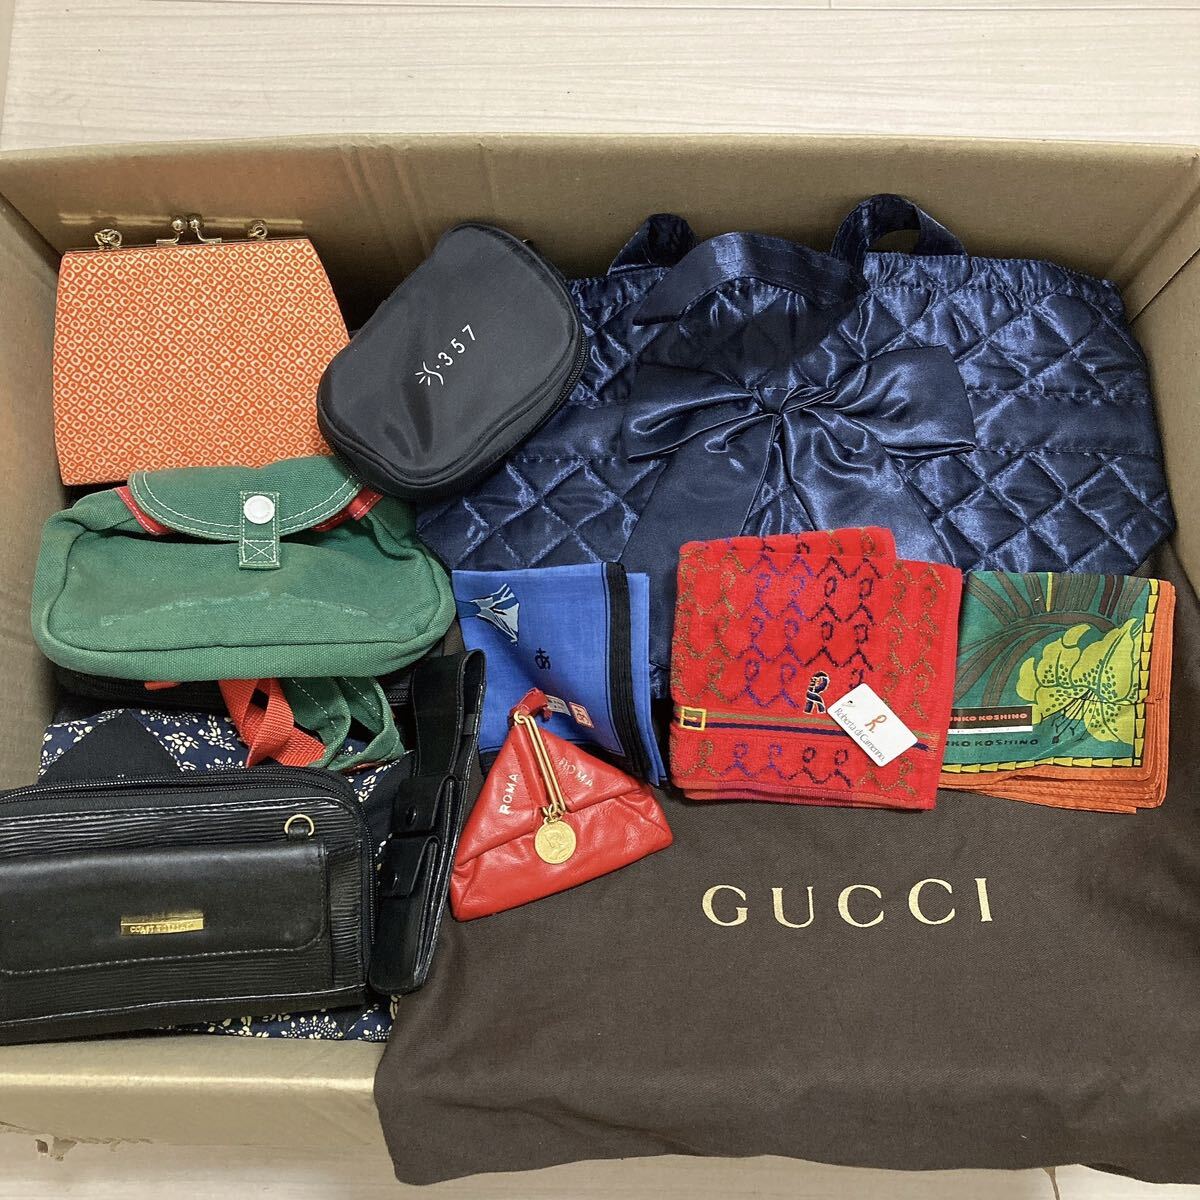 1 иен ~!GUCCI Gucci Roberta di Camerino Nina Ricci Mini house мужской женский кошелек сумка обувь продажа комплектом 25 позиций комплект бренд 